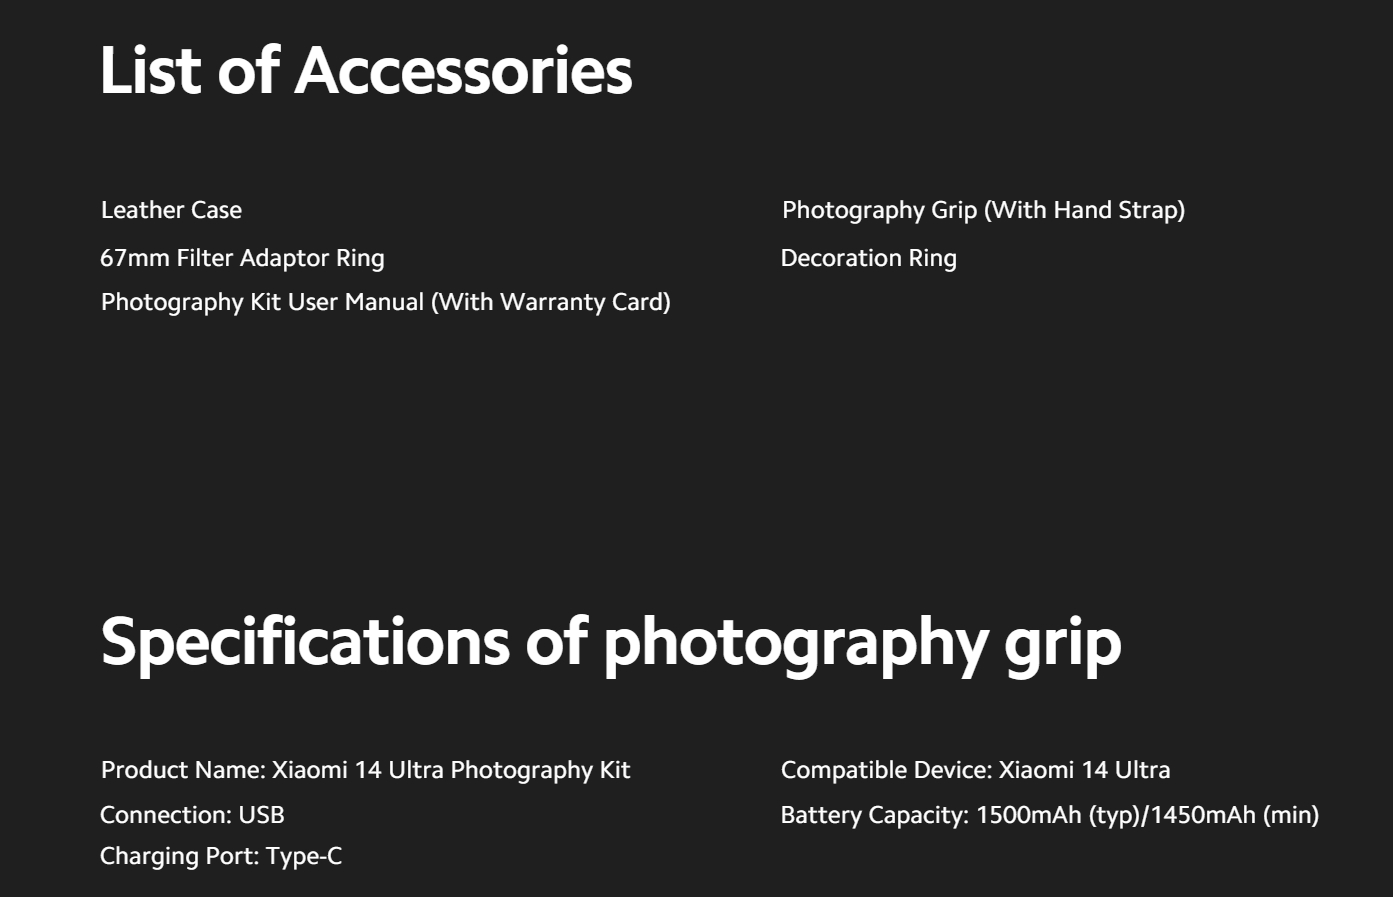 Xiaomi 14 Ultra Photography Kit